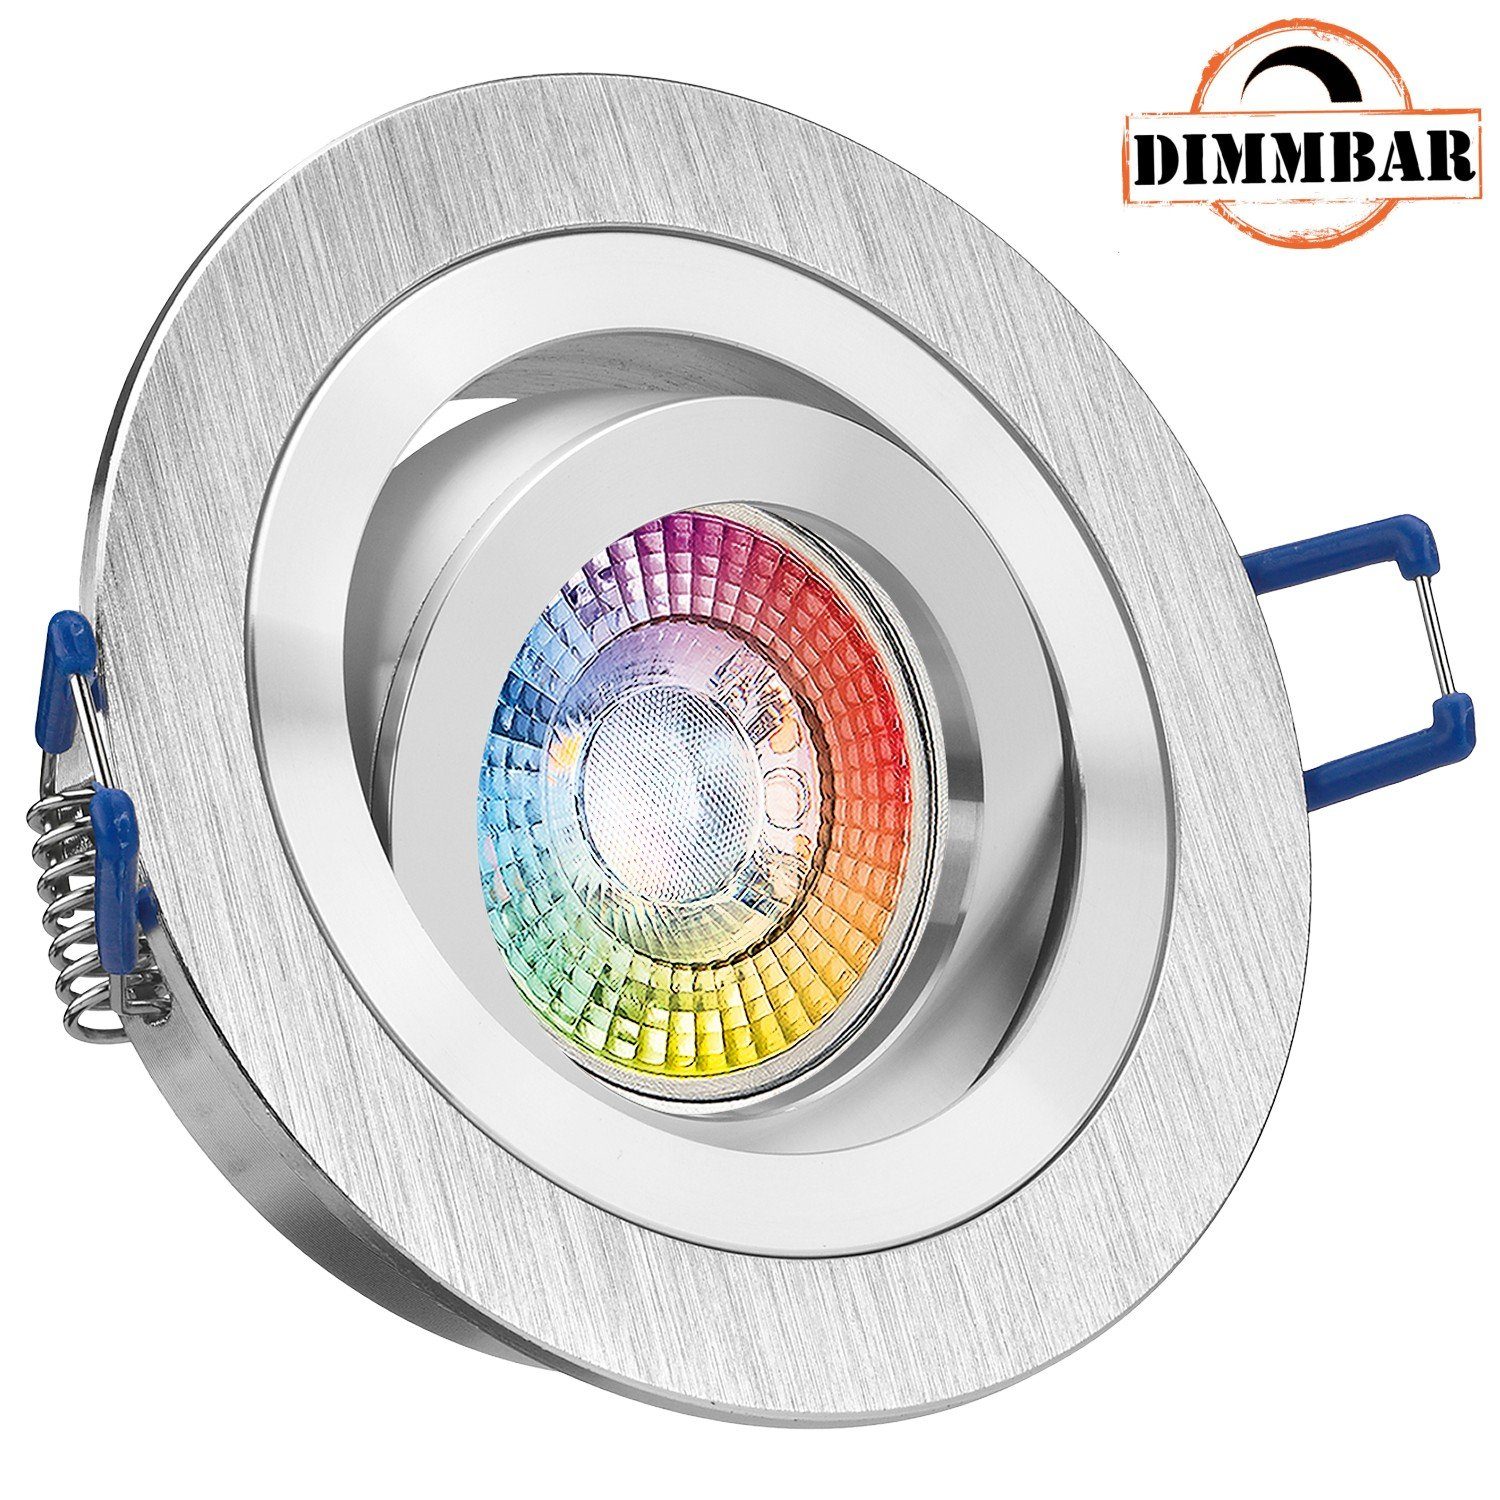 LED - LEDANDO LED Einbaustrahler Set Einbaustrahler zweifarbig flach mit 3W extra in bicolor RGB